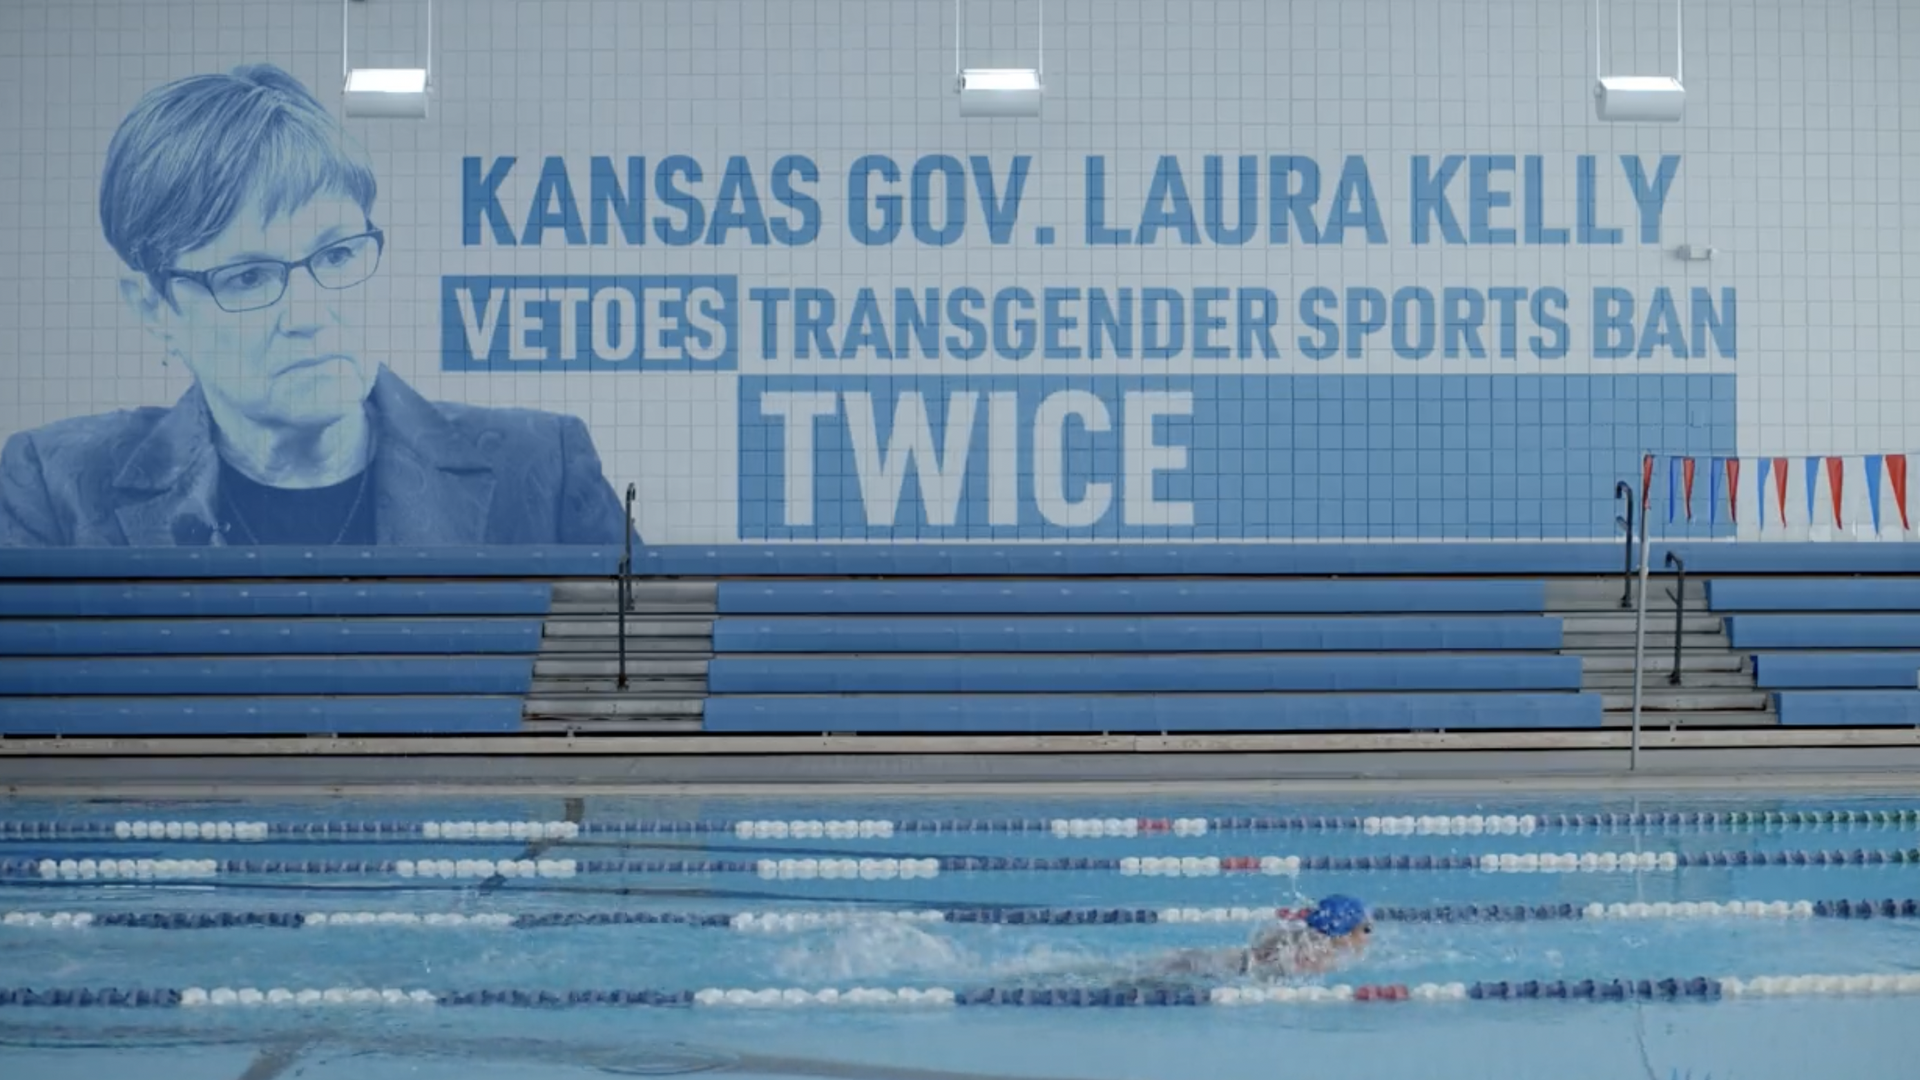 Mural that says Laura Kelly vetoed transgender sports ban twice